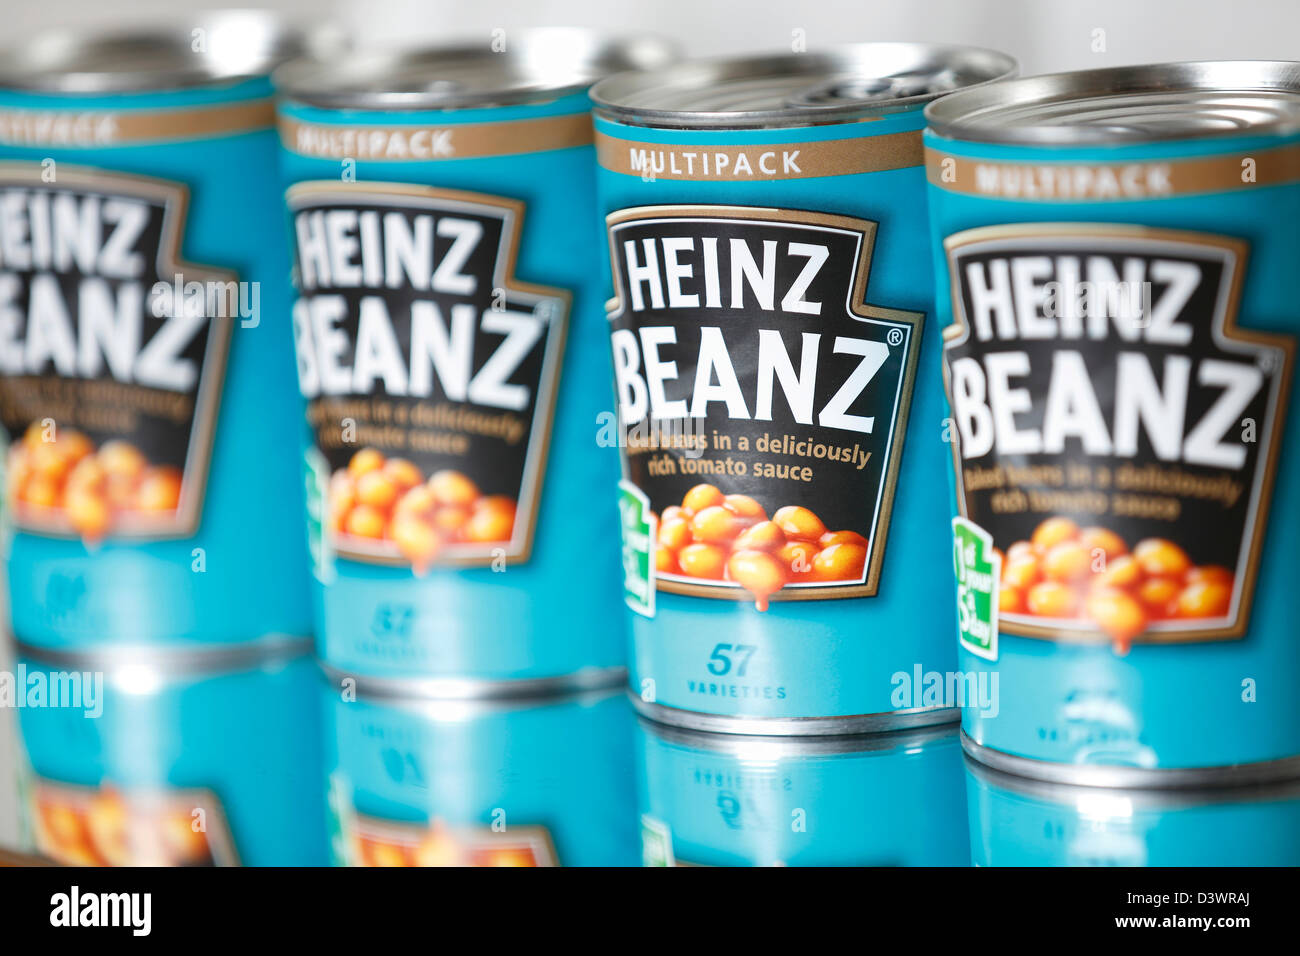 Heinz Baked Beans. Stock Photo